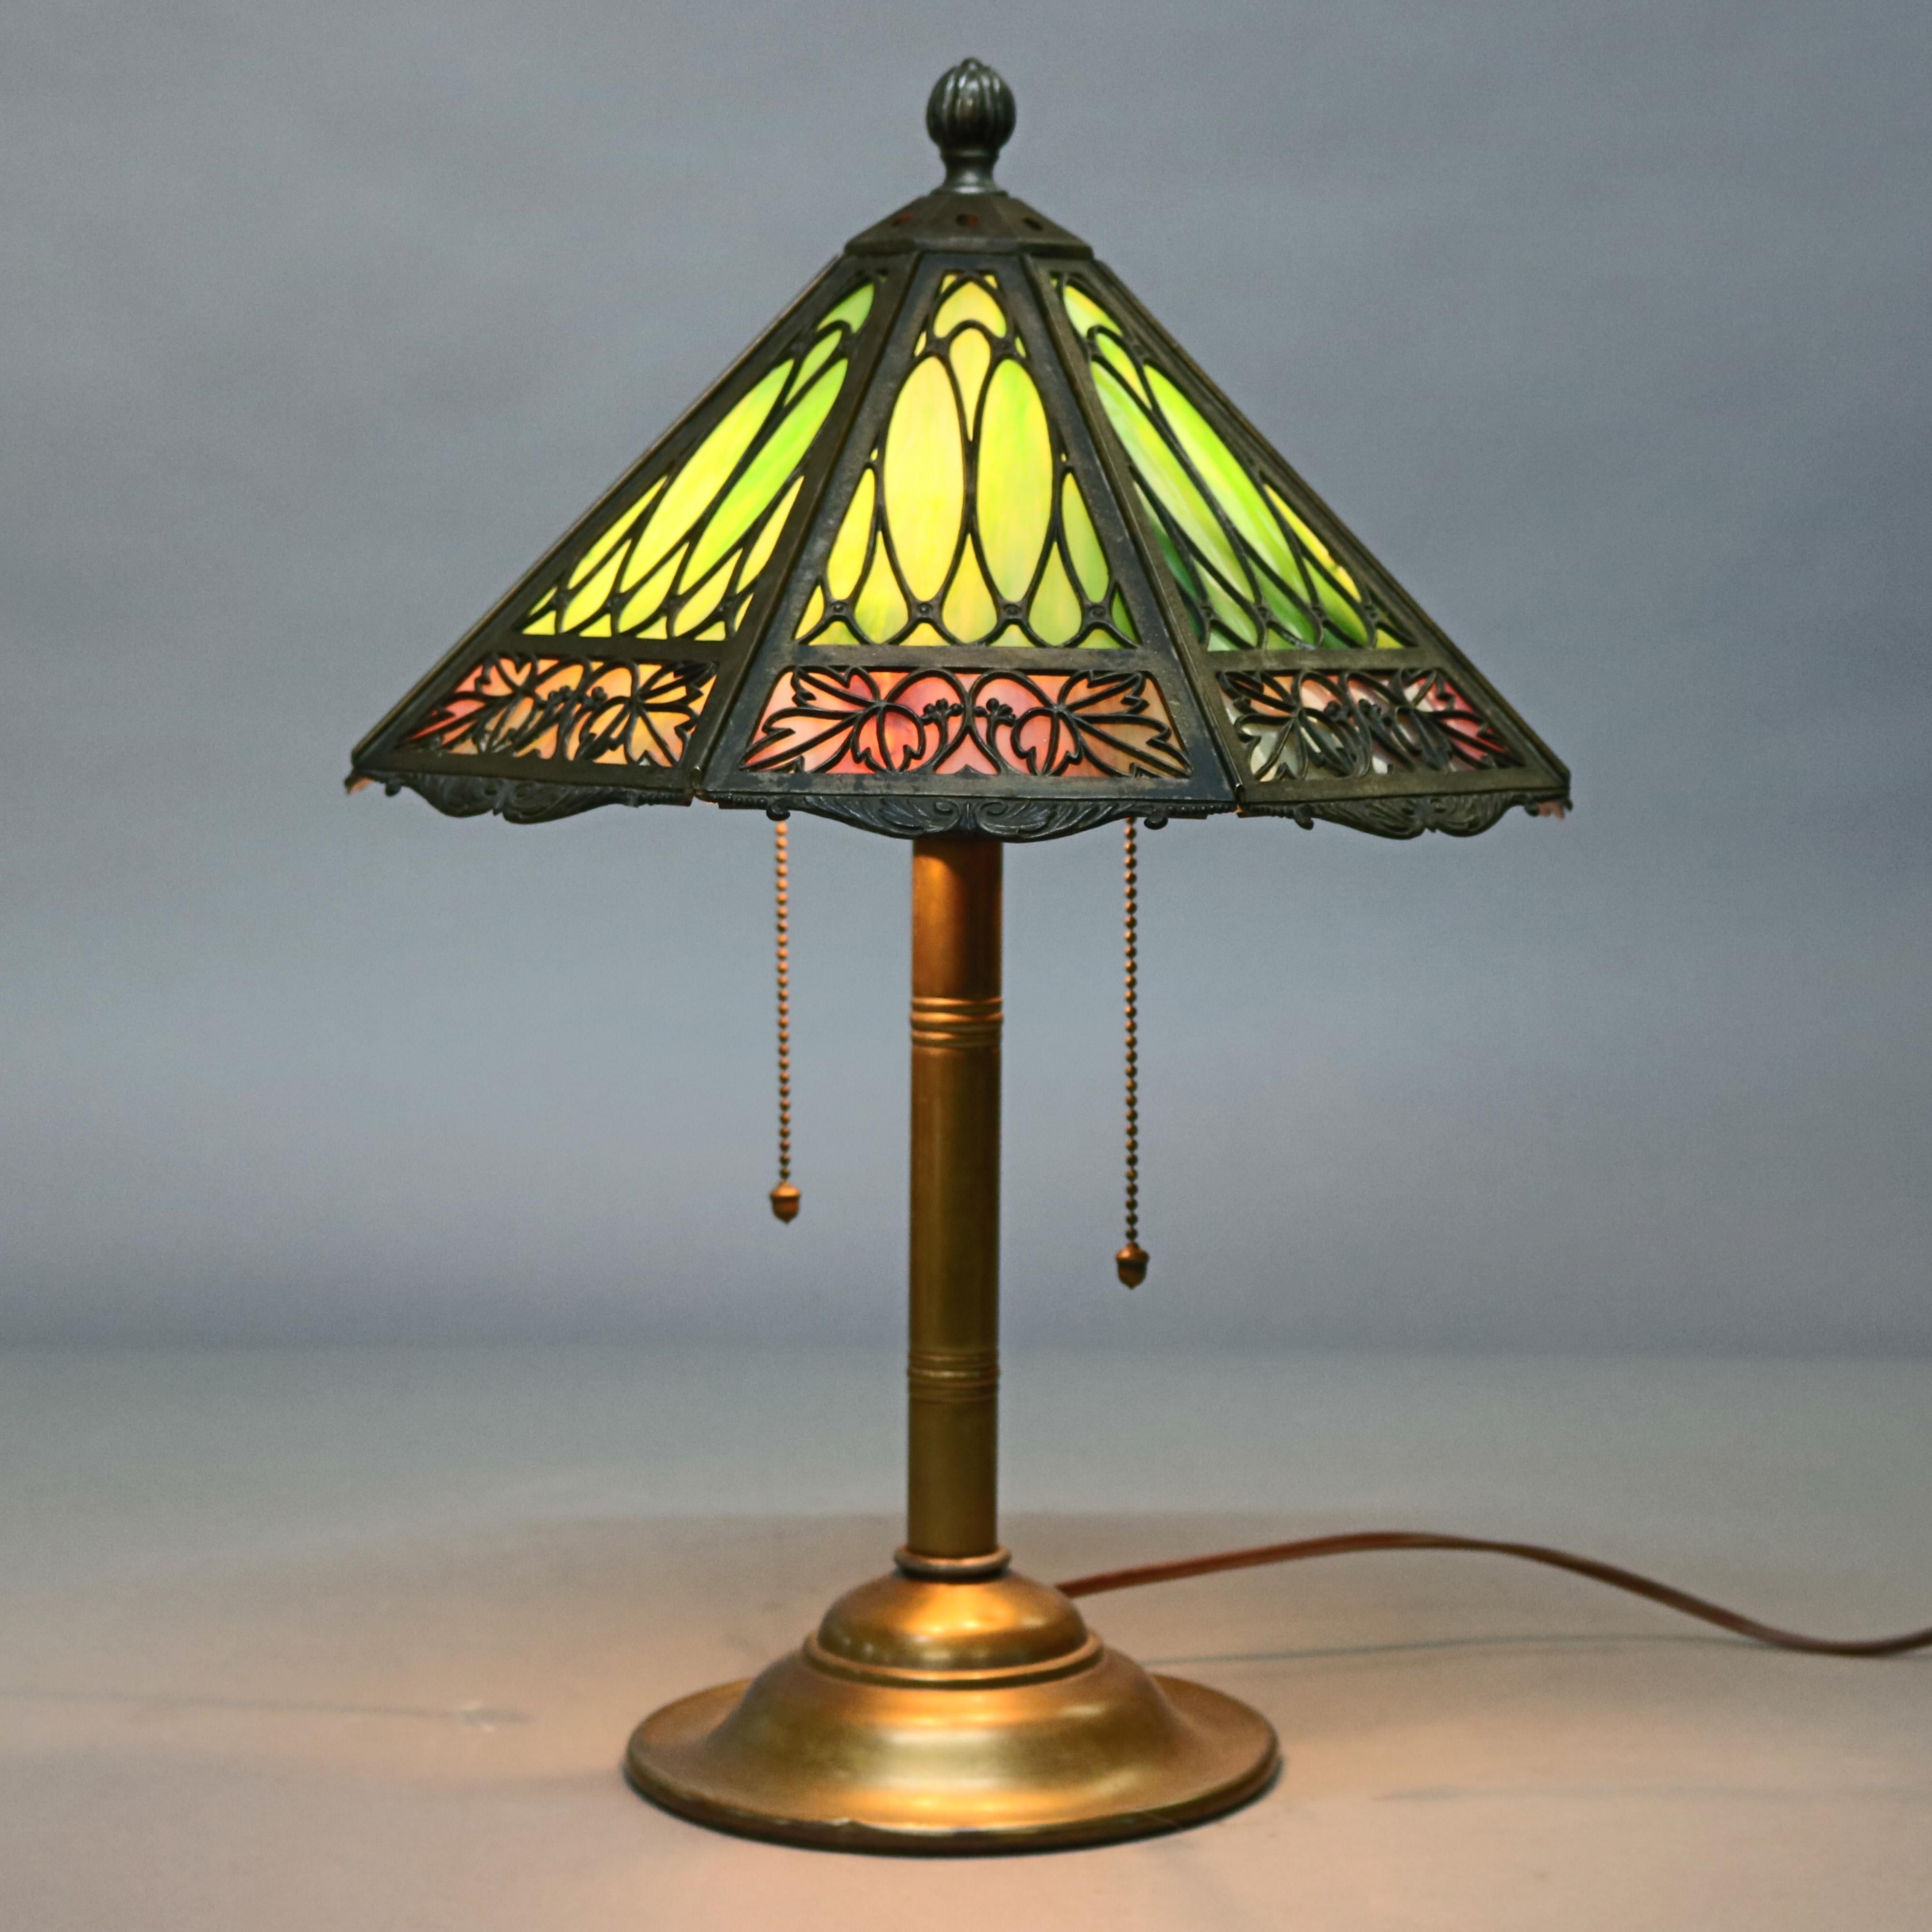 American Antique Arts & Crafts Bradly & Hubbard Slag Glass Table Lamp, circa 1920